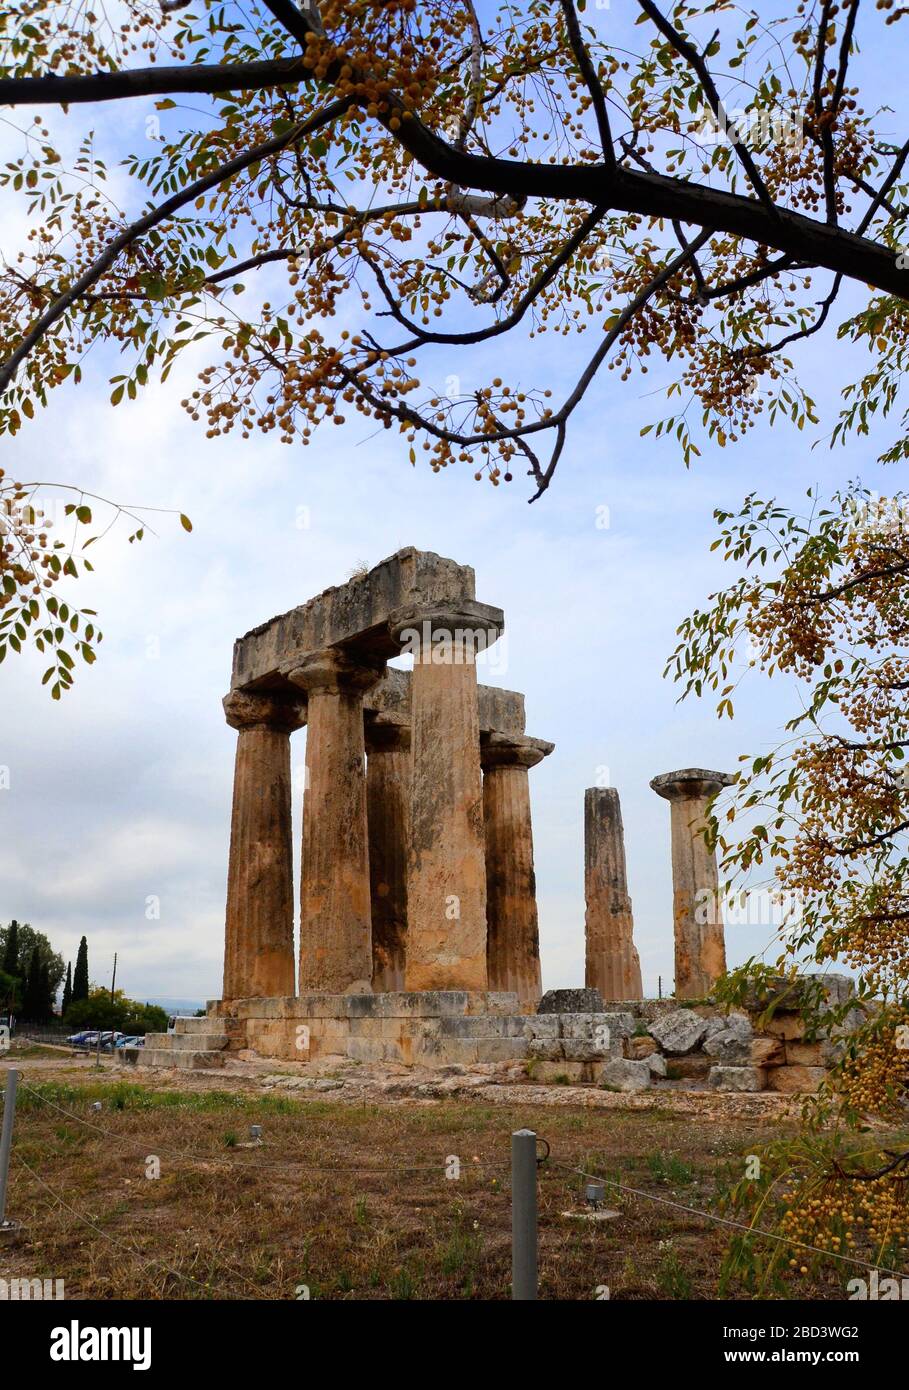 Ruins of the doric temple of Apollo in Ancient Corinth, Greece. Stock Photo